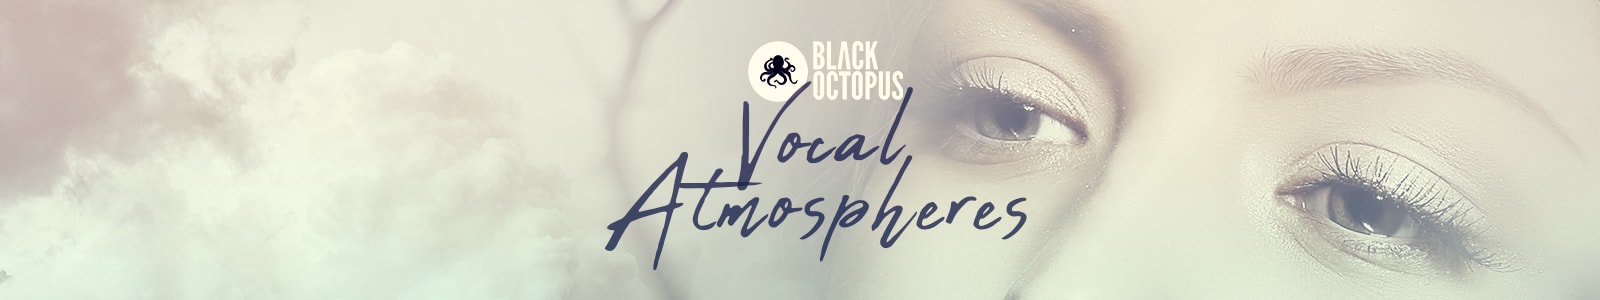 Christina Soto Vocal Atmospheres by Black Octopus Sound